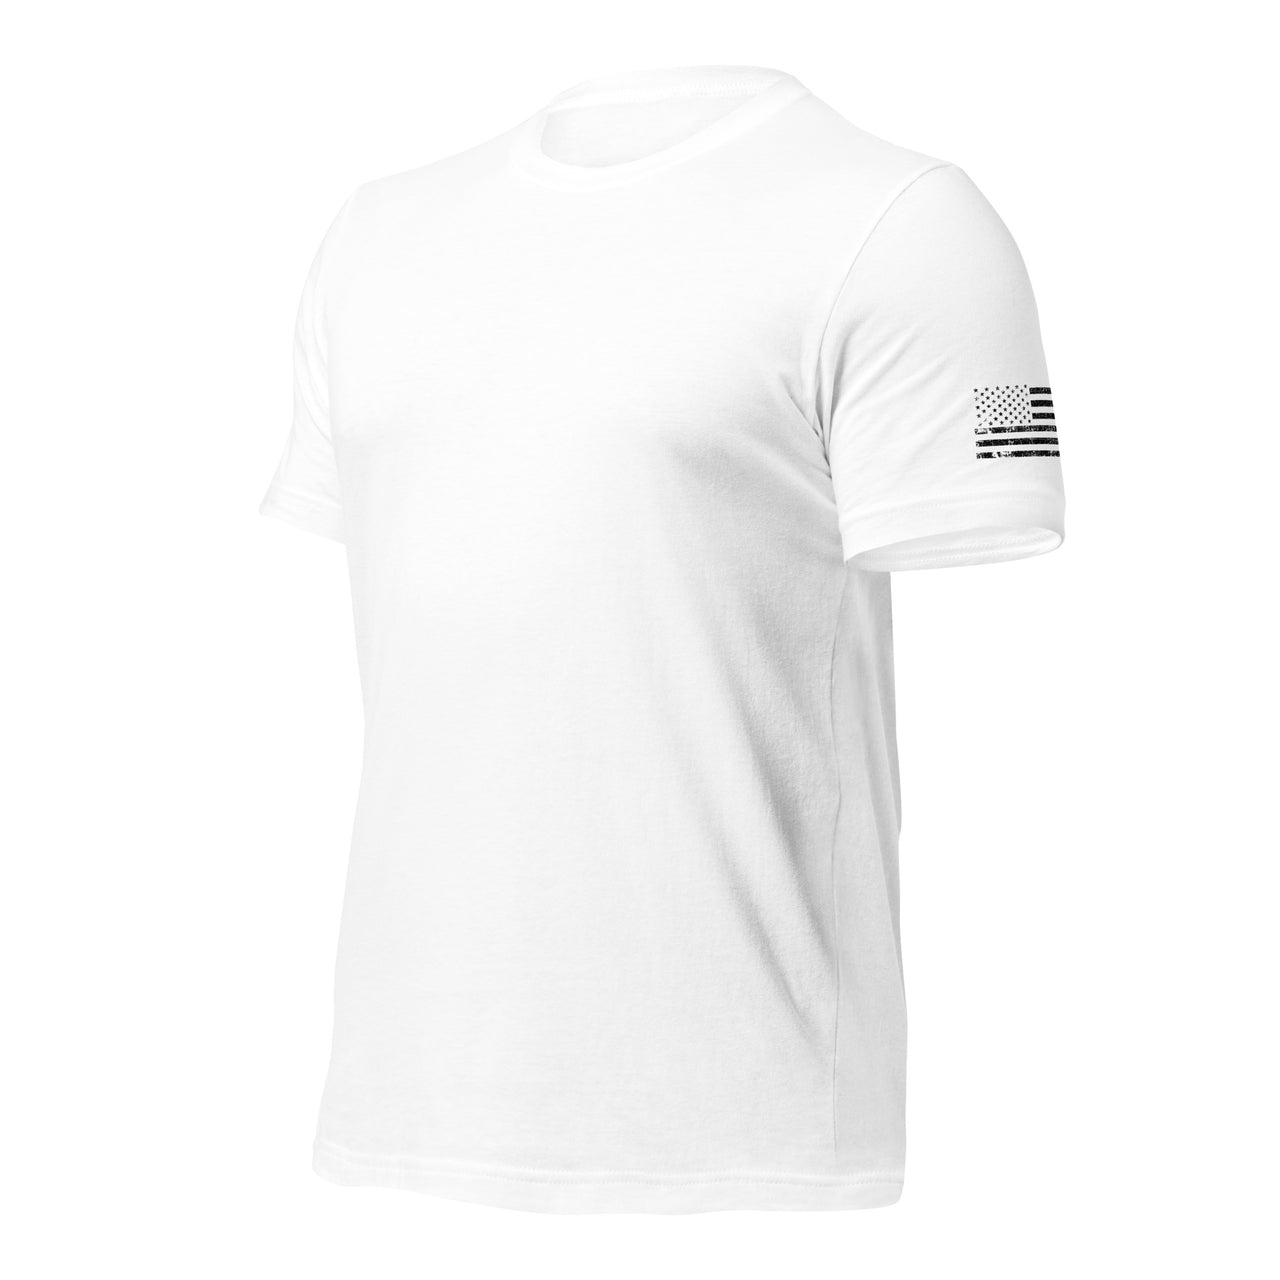 American Flag Sleeve Print T-shirt in white